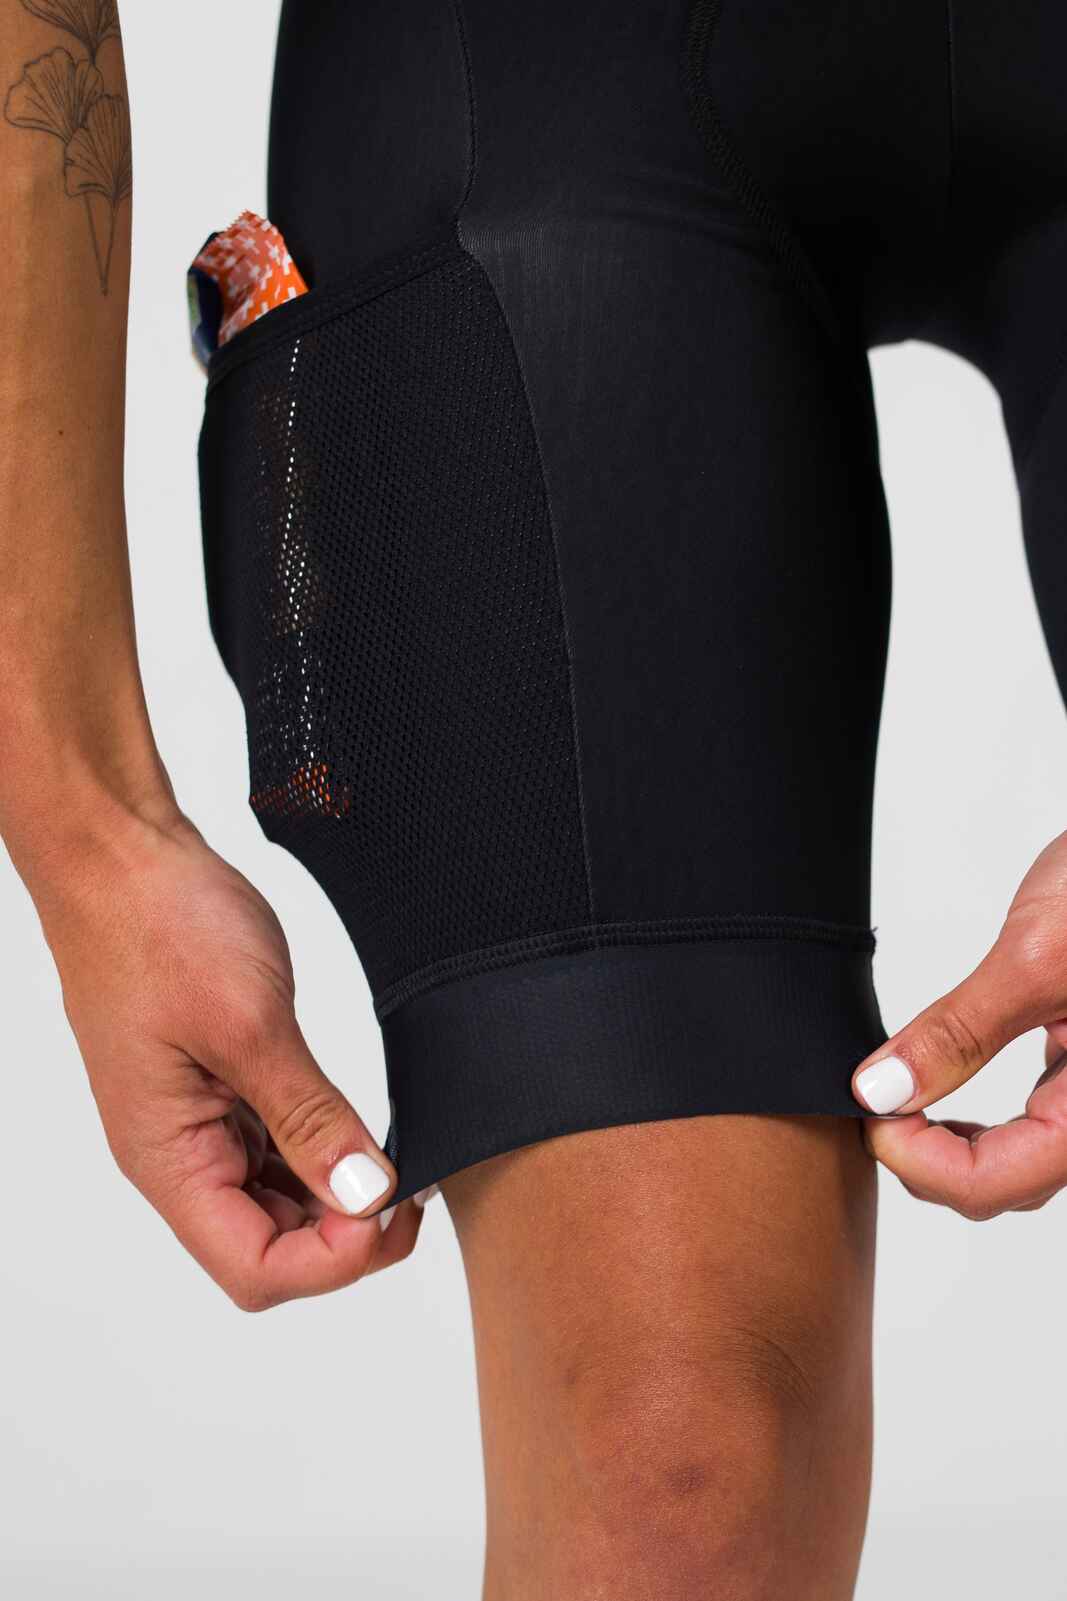 Women's Thermal Cycling Bibs - Leg Band and Pocket